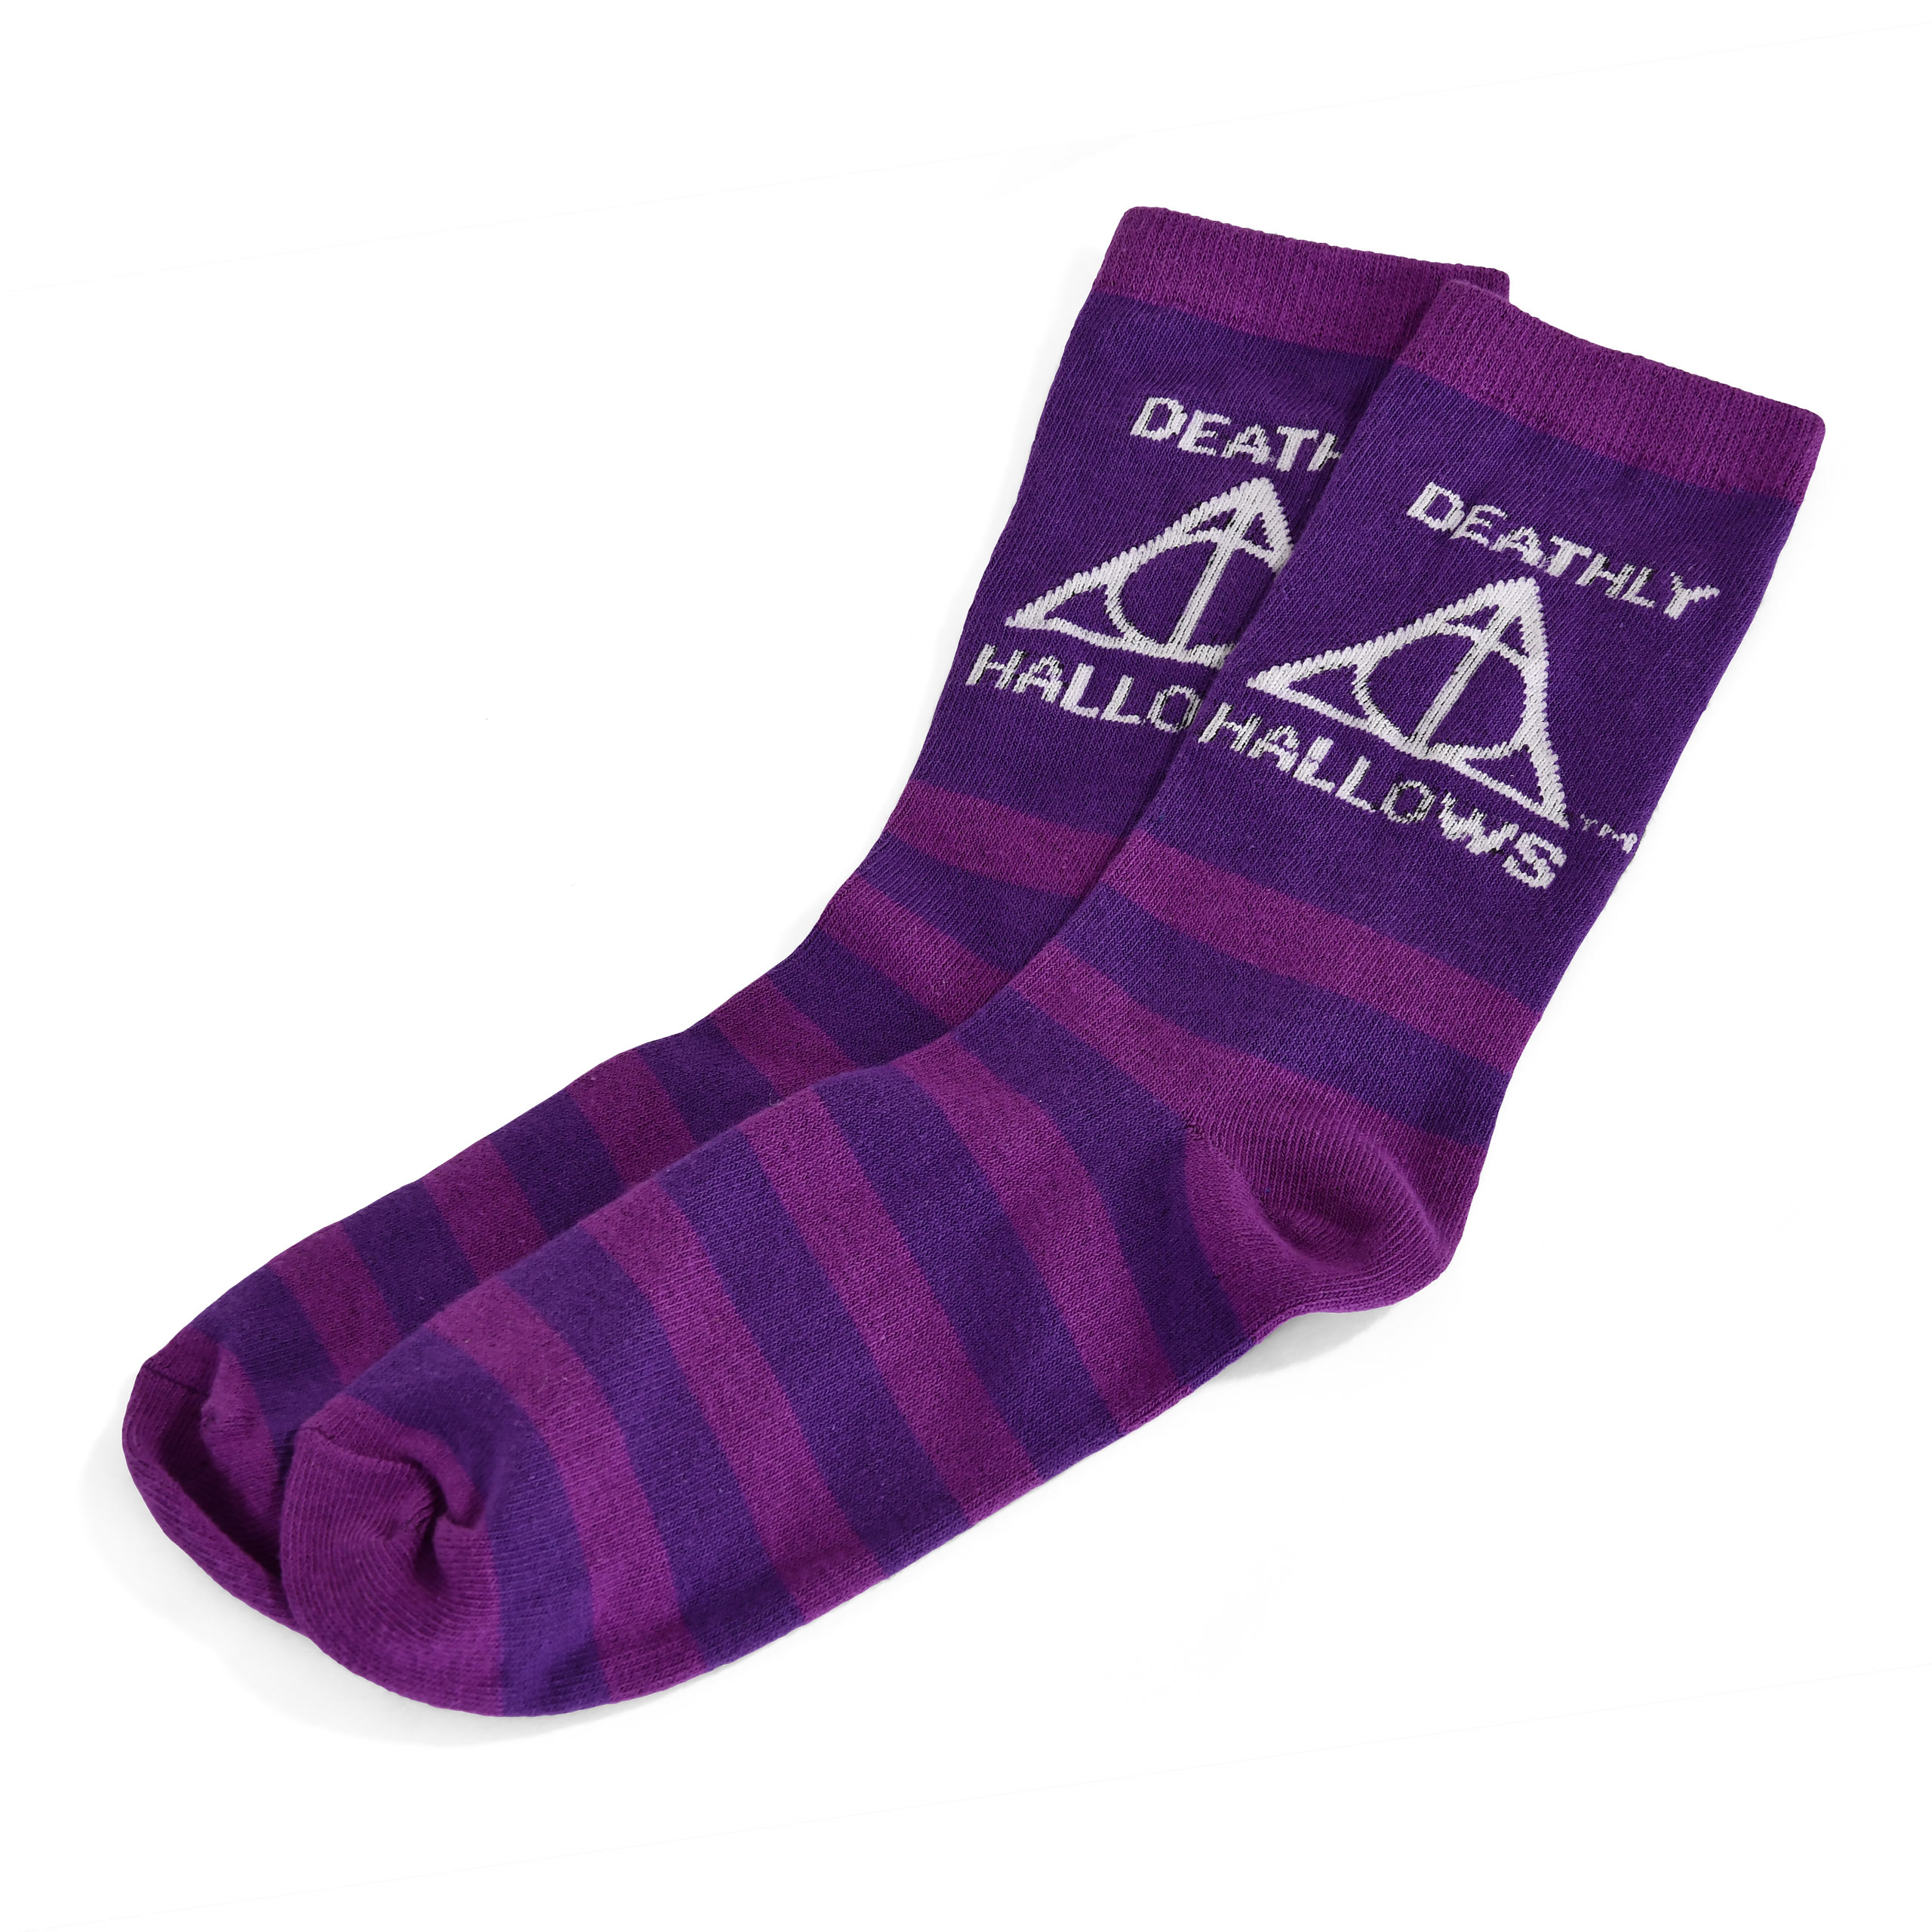 Harry Potter - Deathly Hallows Socken lila